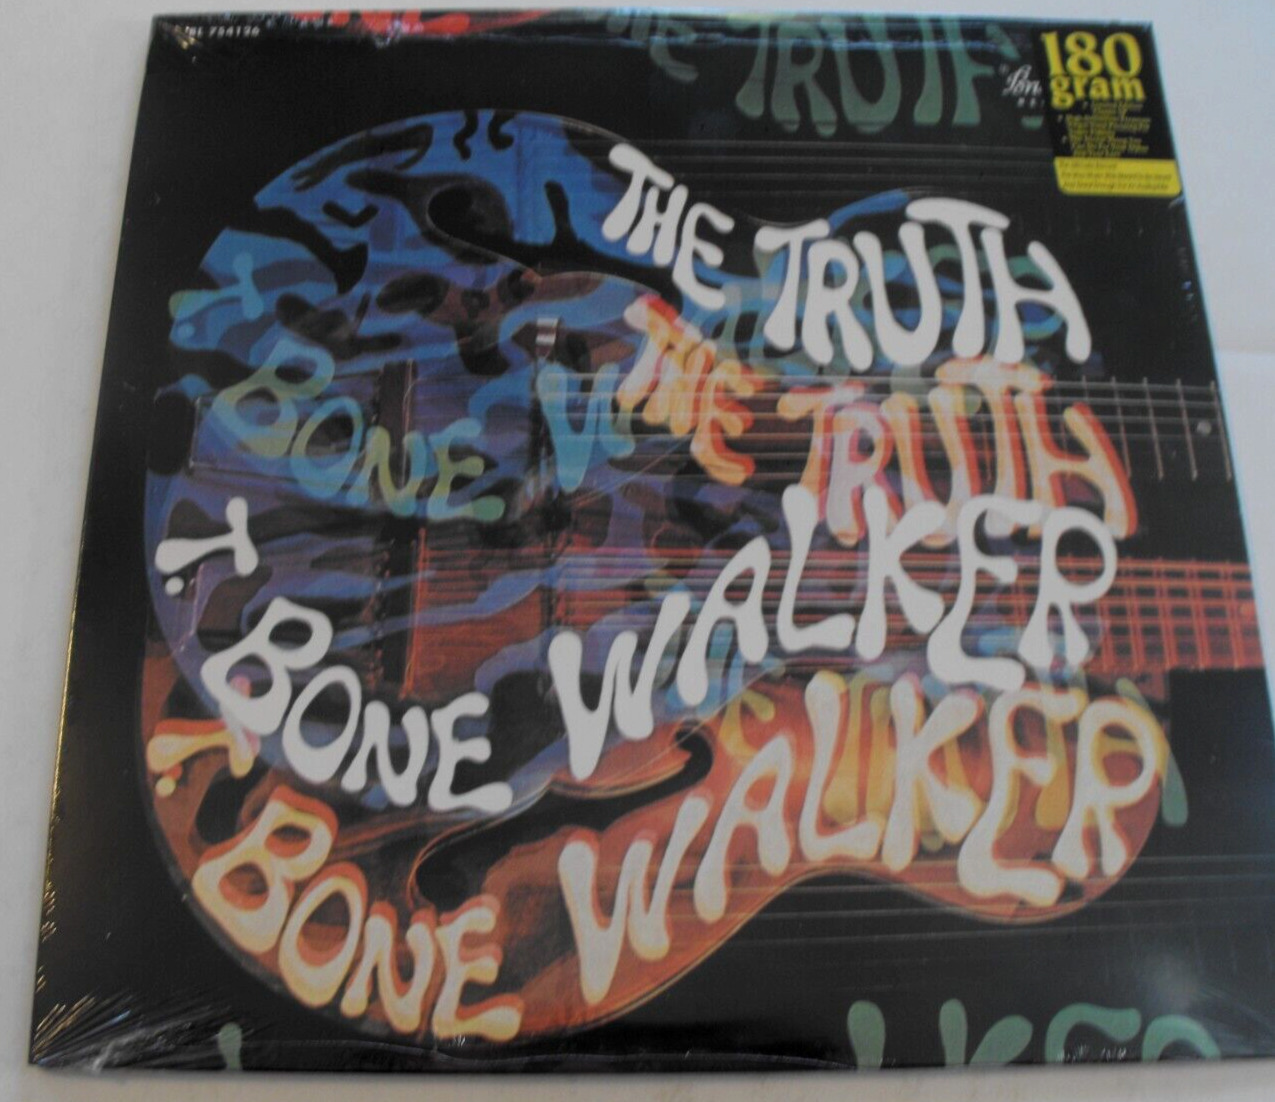 T. BONE WALKER - The Truth - New, Sealed Vinyl LP Record Album